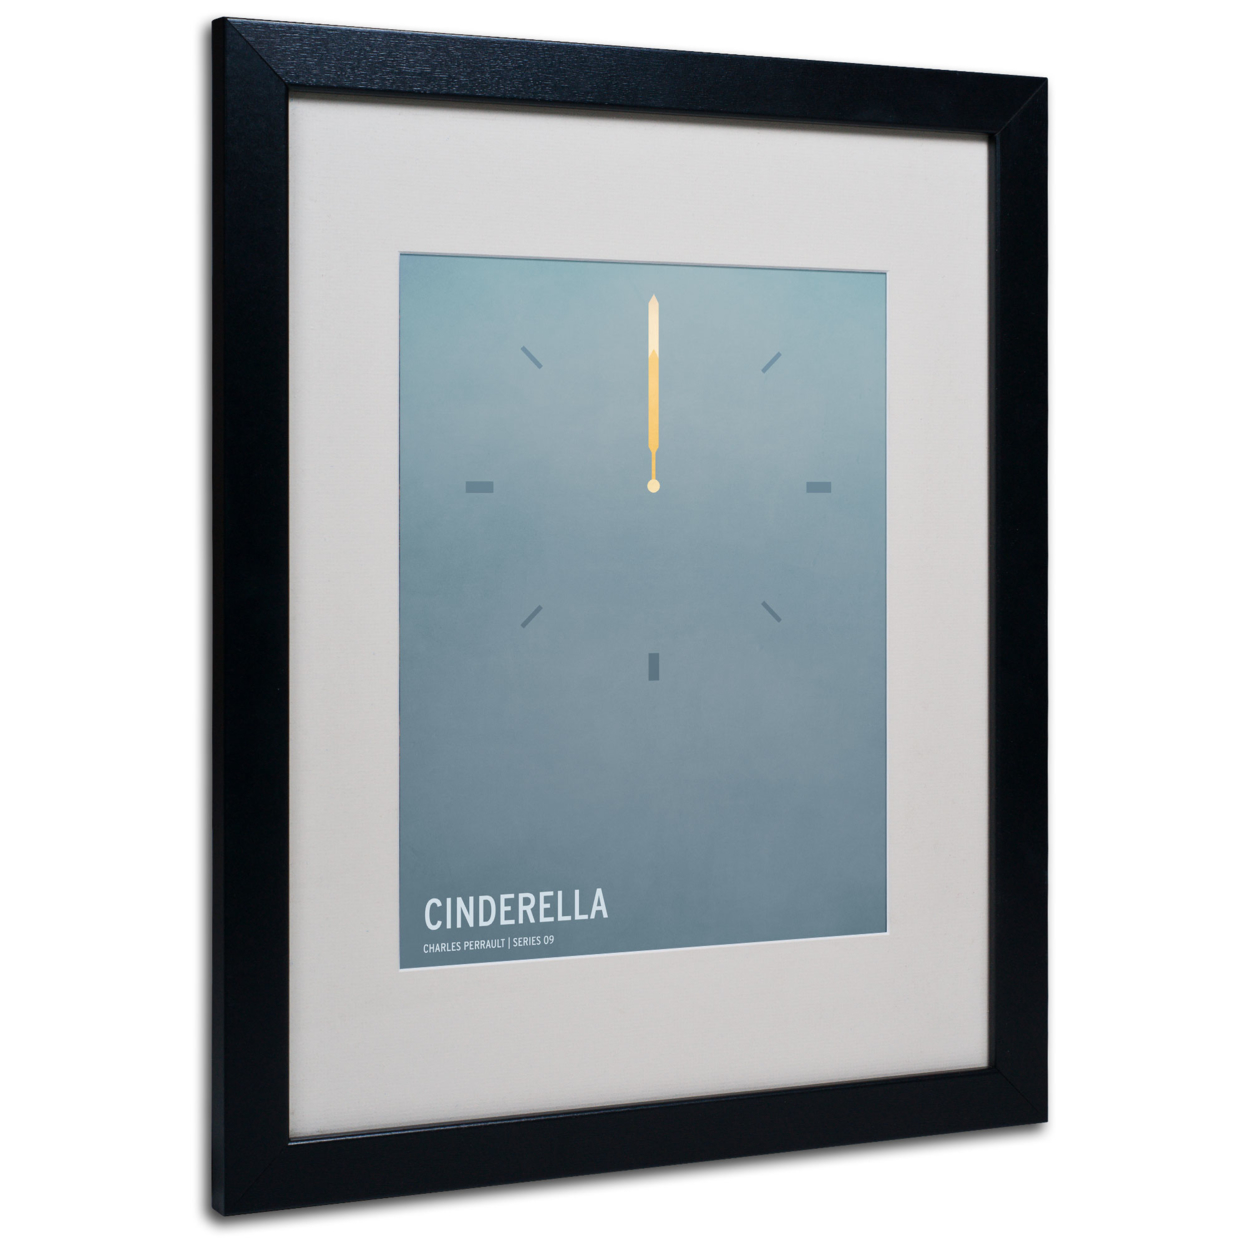 Christian Jackson 'Cinderella' Black Wooden Framed Art 18 X 22 Inches